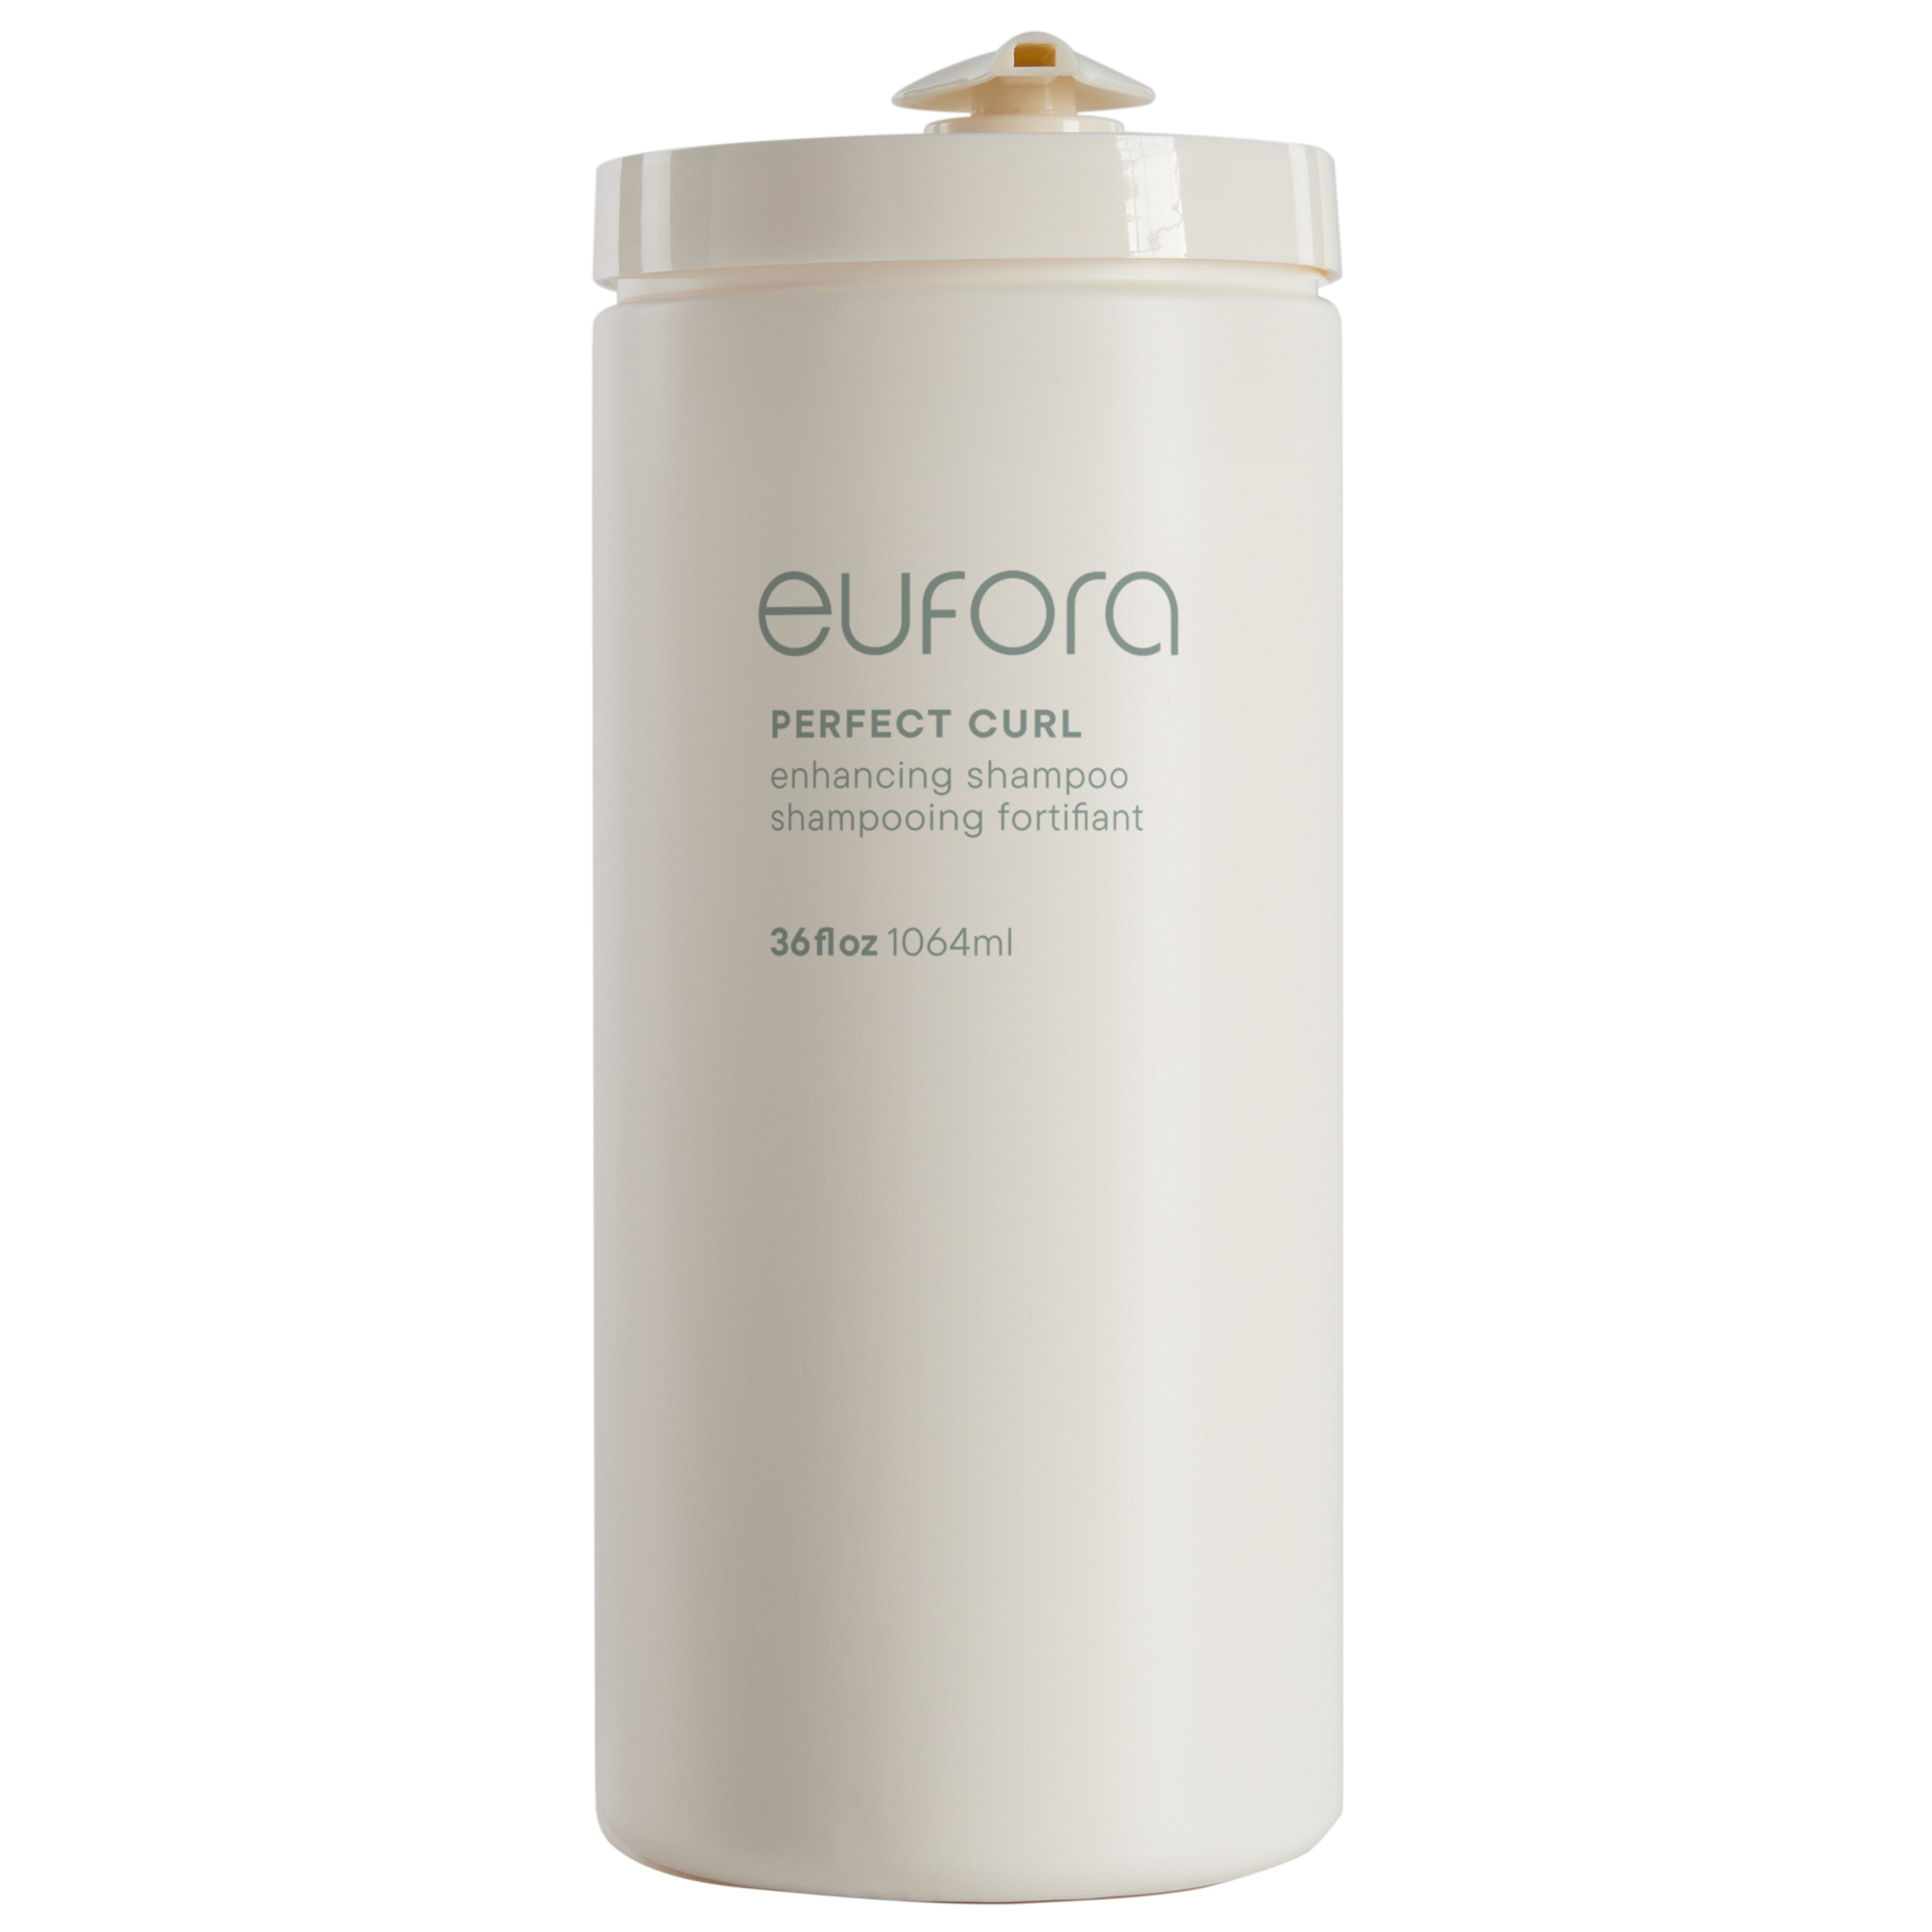 Eufora PERFECT CURL Enhancing Shampoo